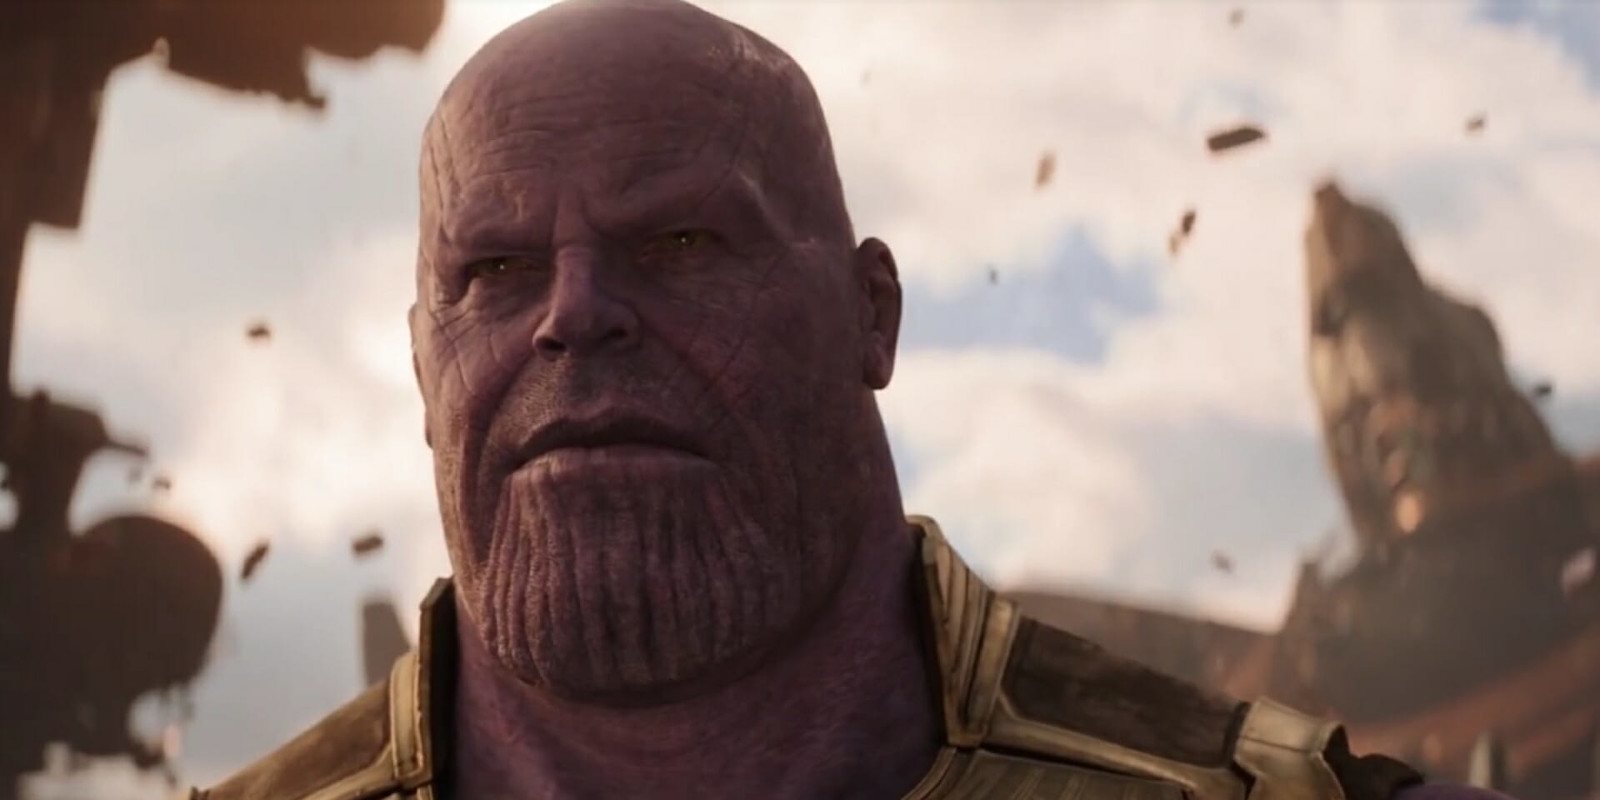 El creador de Thanos critica duramente a Donald Trump por usar a su personaje